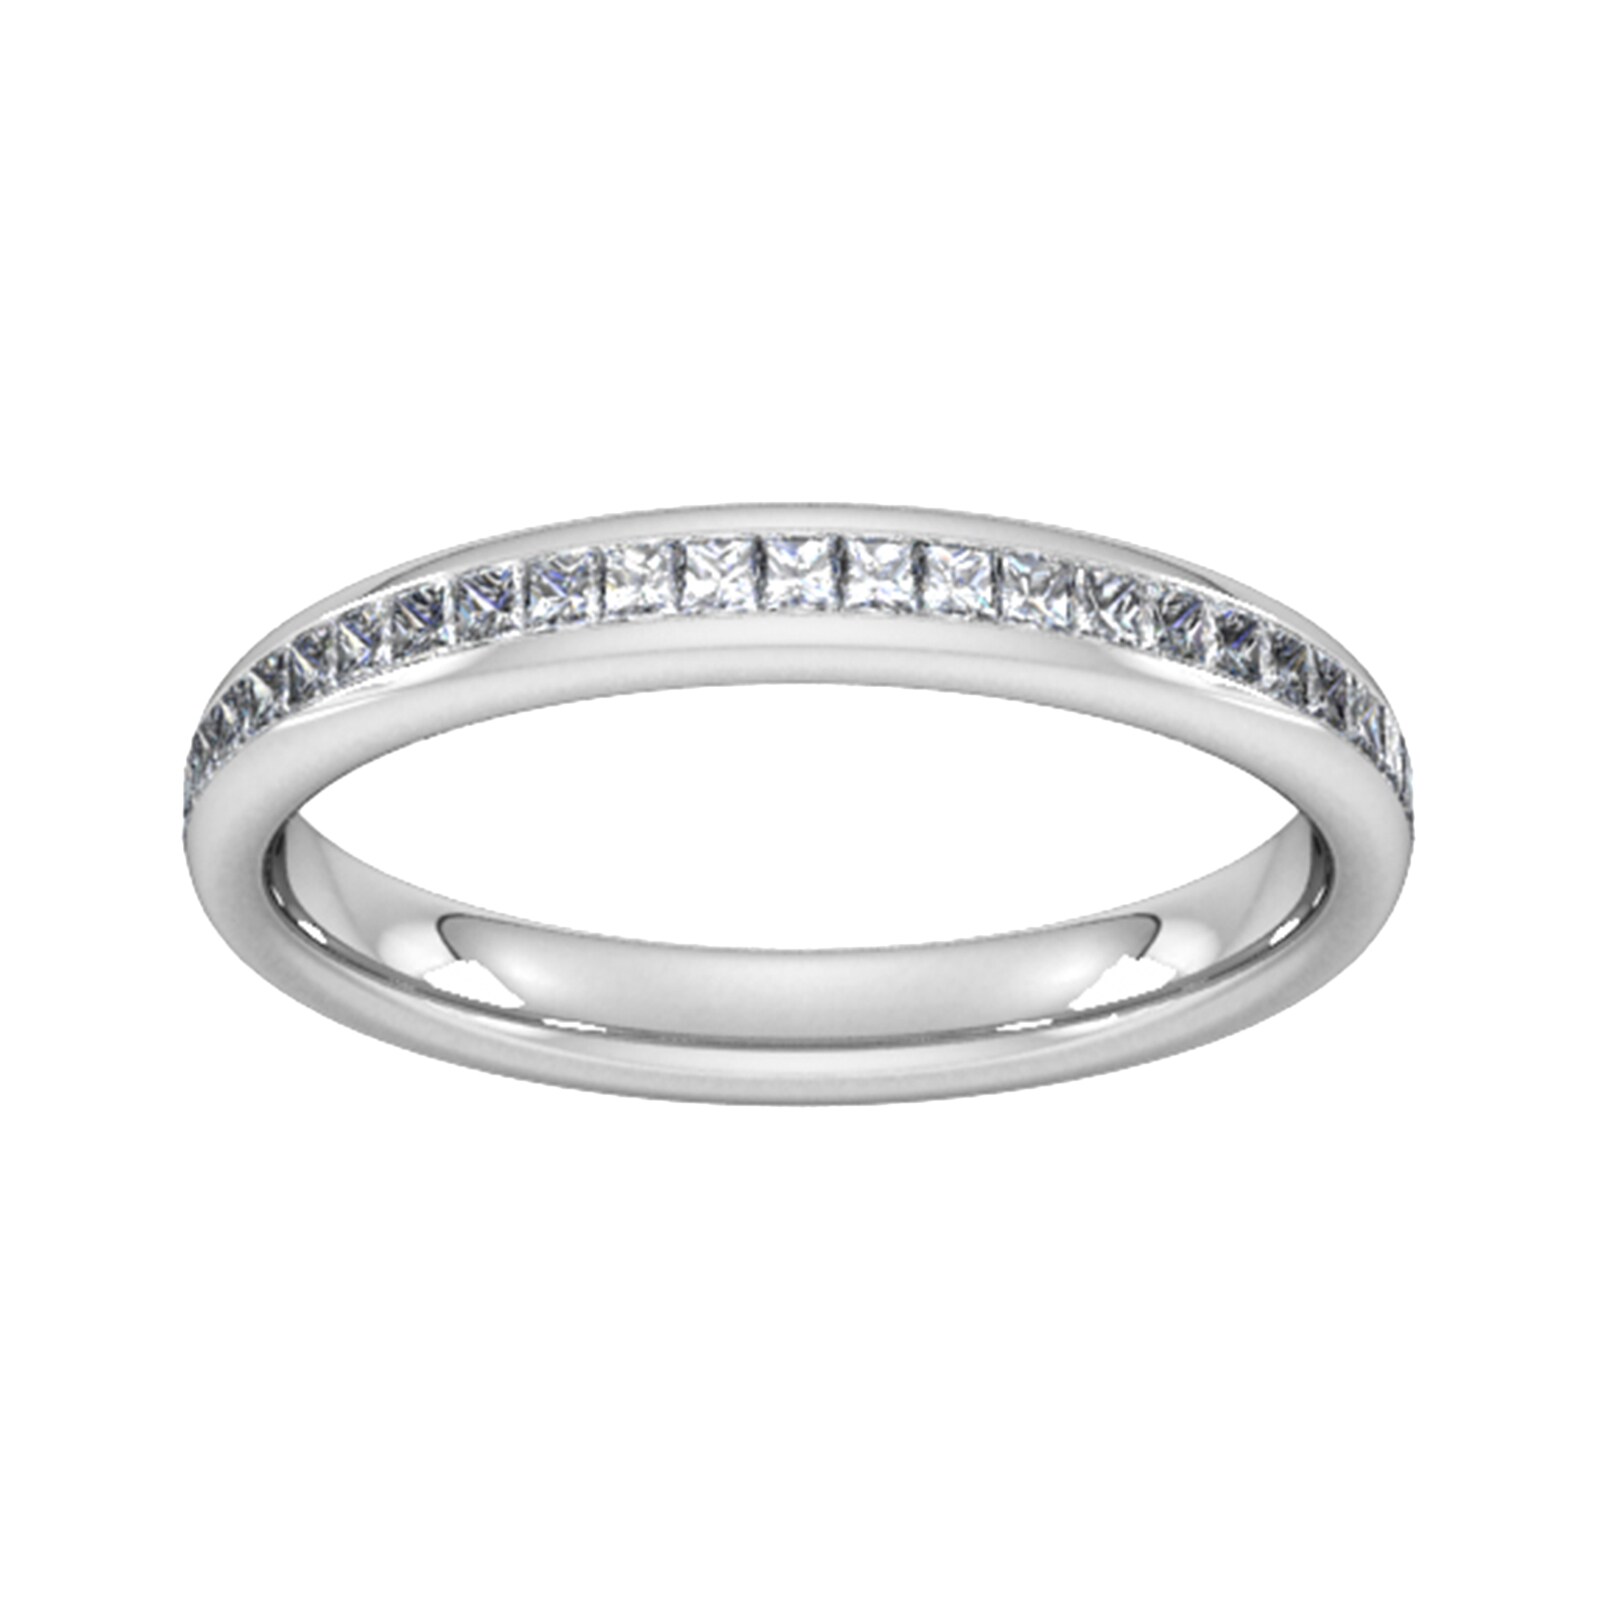 0.34 Carat Total Weight Princess Cut Channel Set Wedding Ring In Platinum - Ring Size U